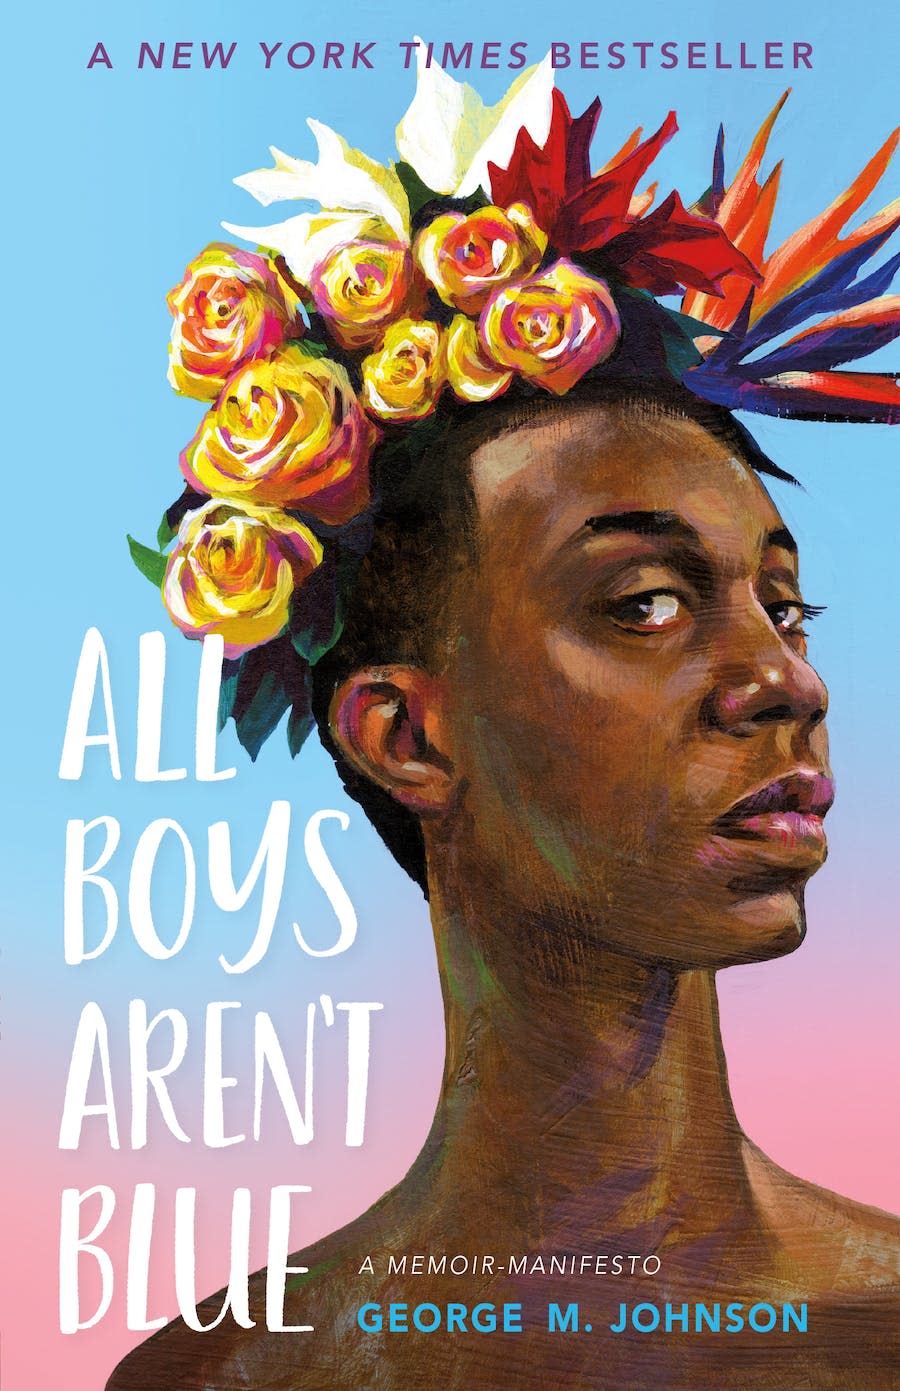 "All Boys Aren't Blue: A Memoir-Manifesto," by George M. Johnson.